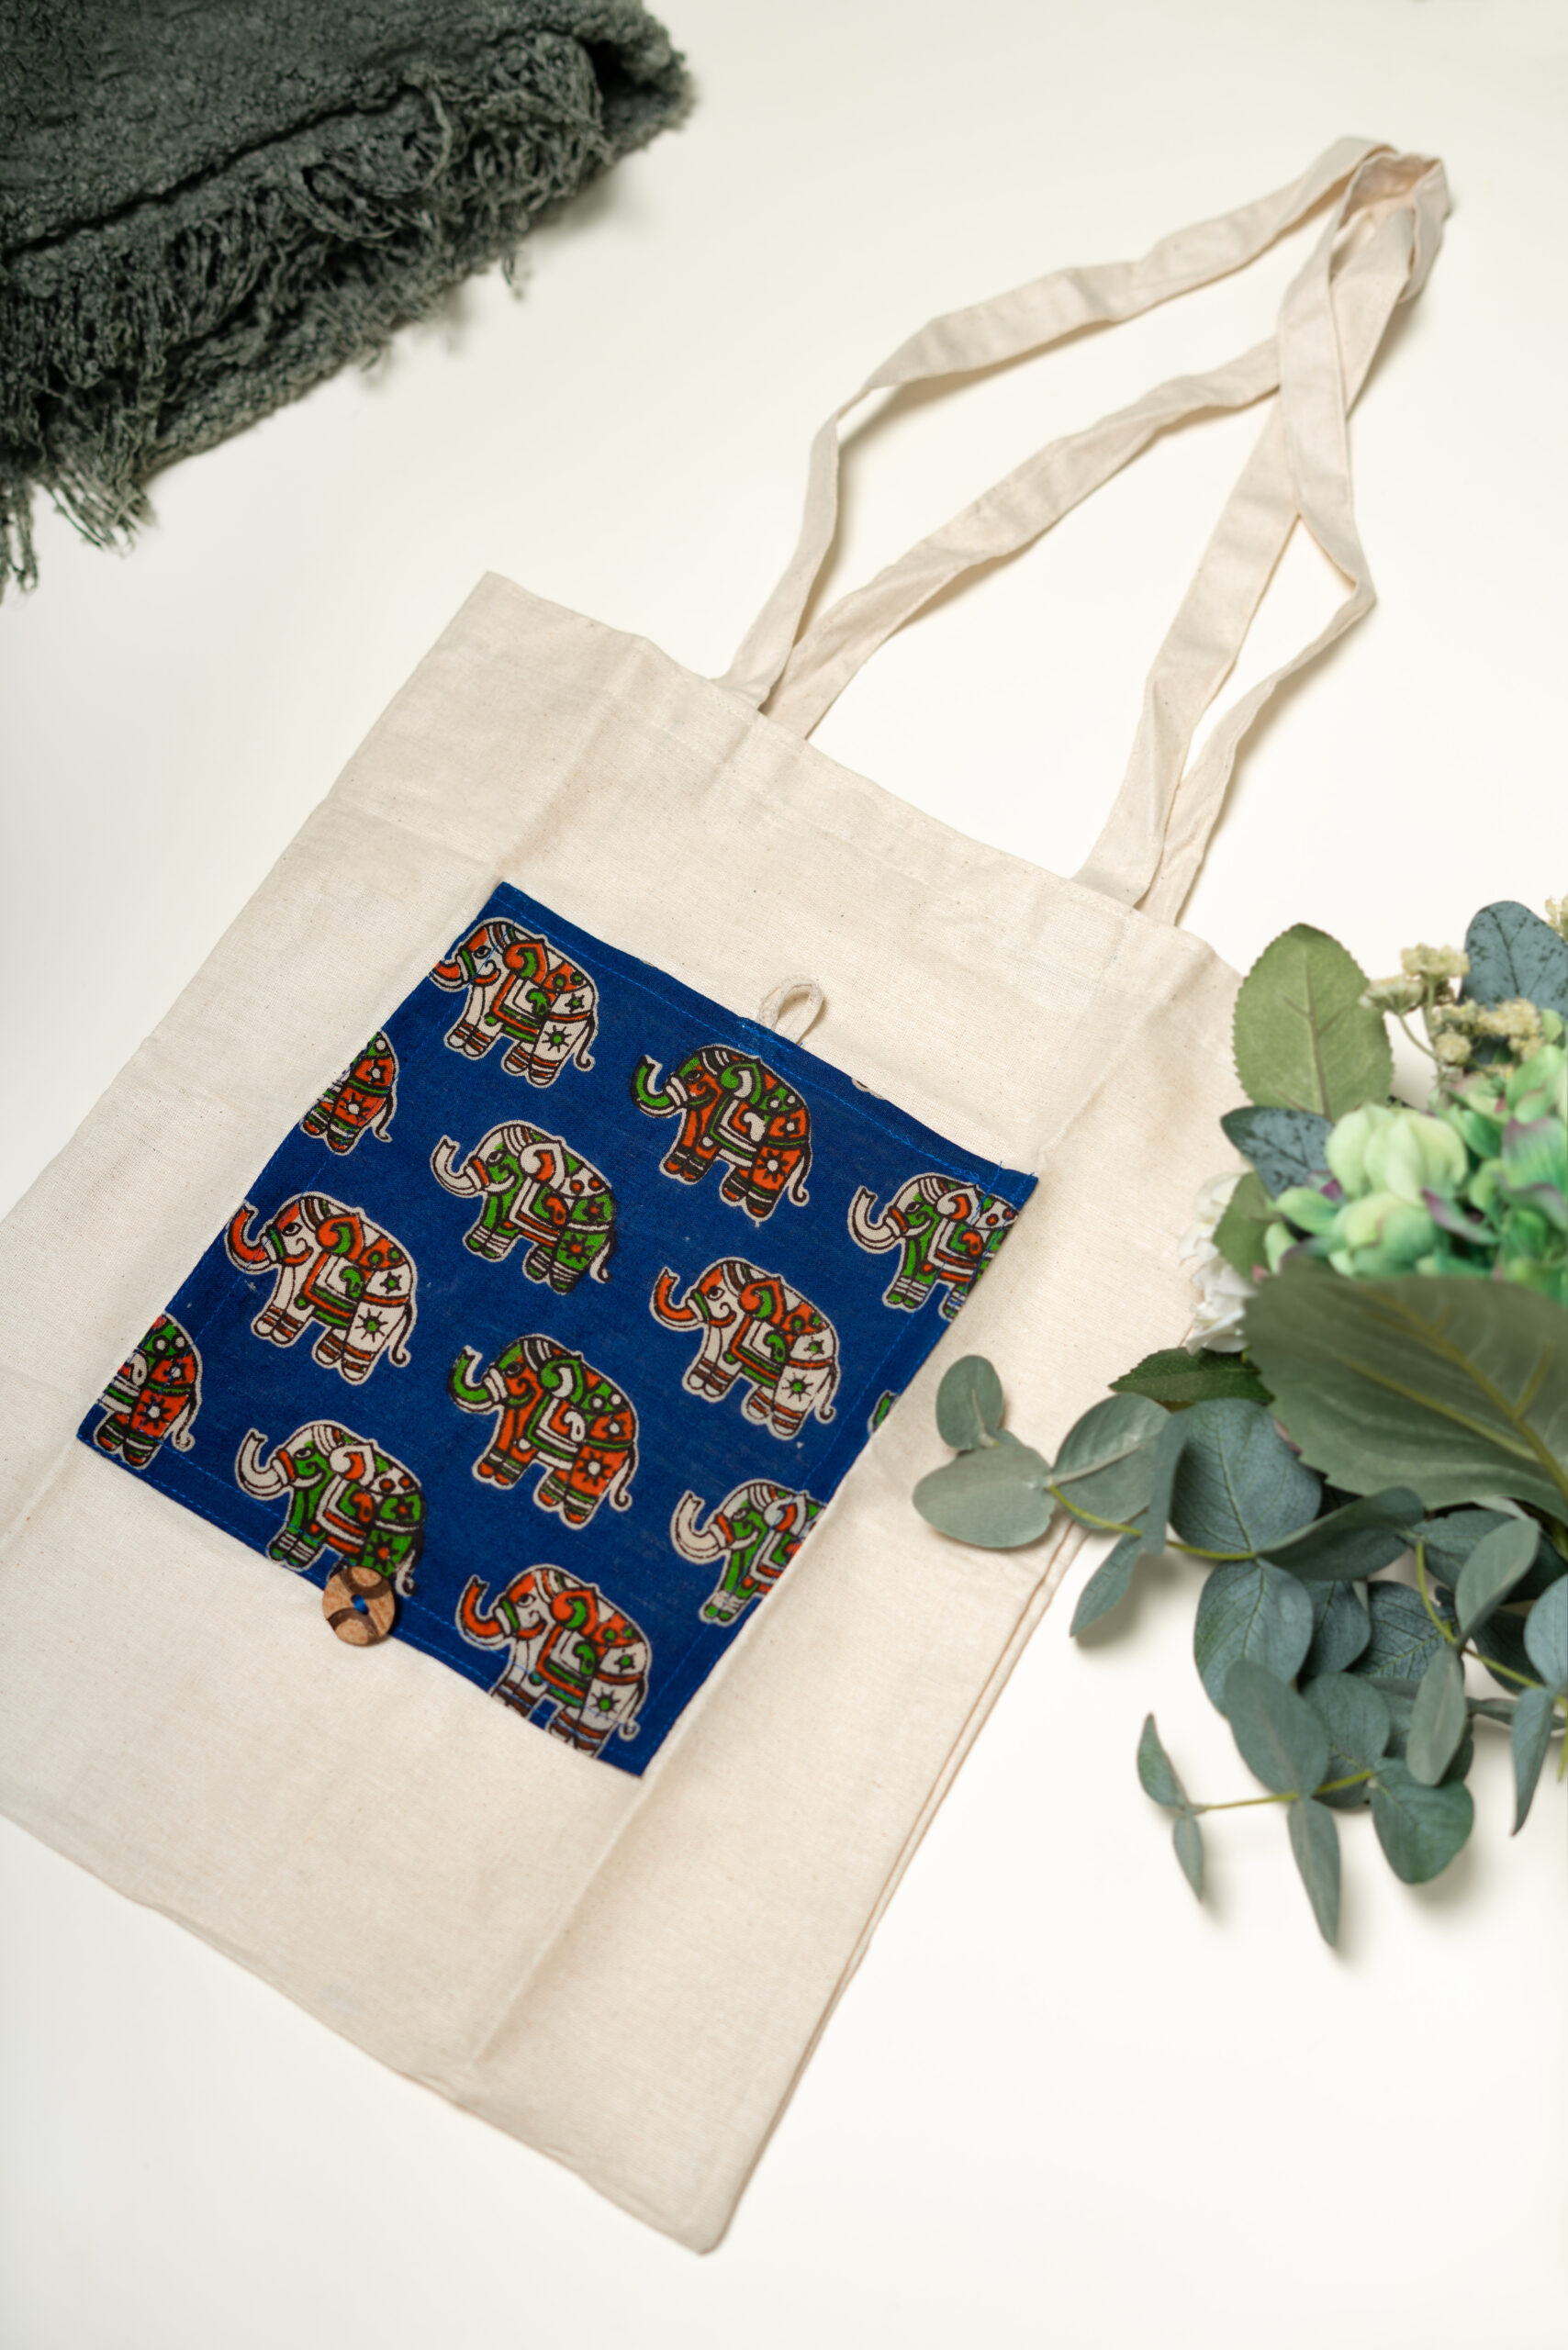 Mathi Kalamkari Tote Bags Handmade in India, Fair Trade, Compassionate  Trade | eBay